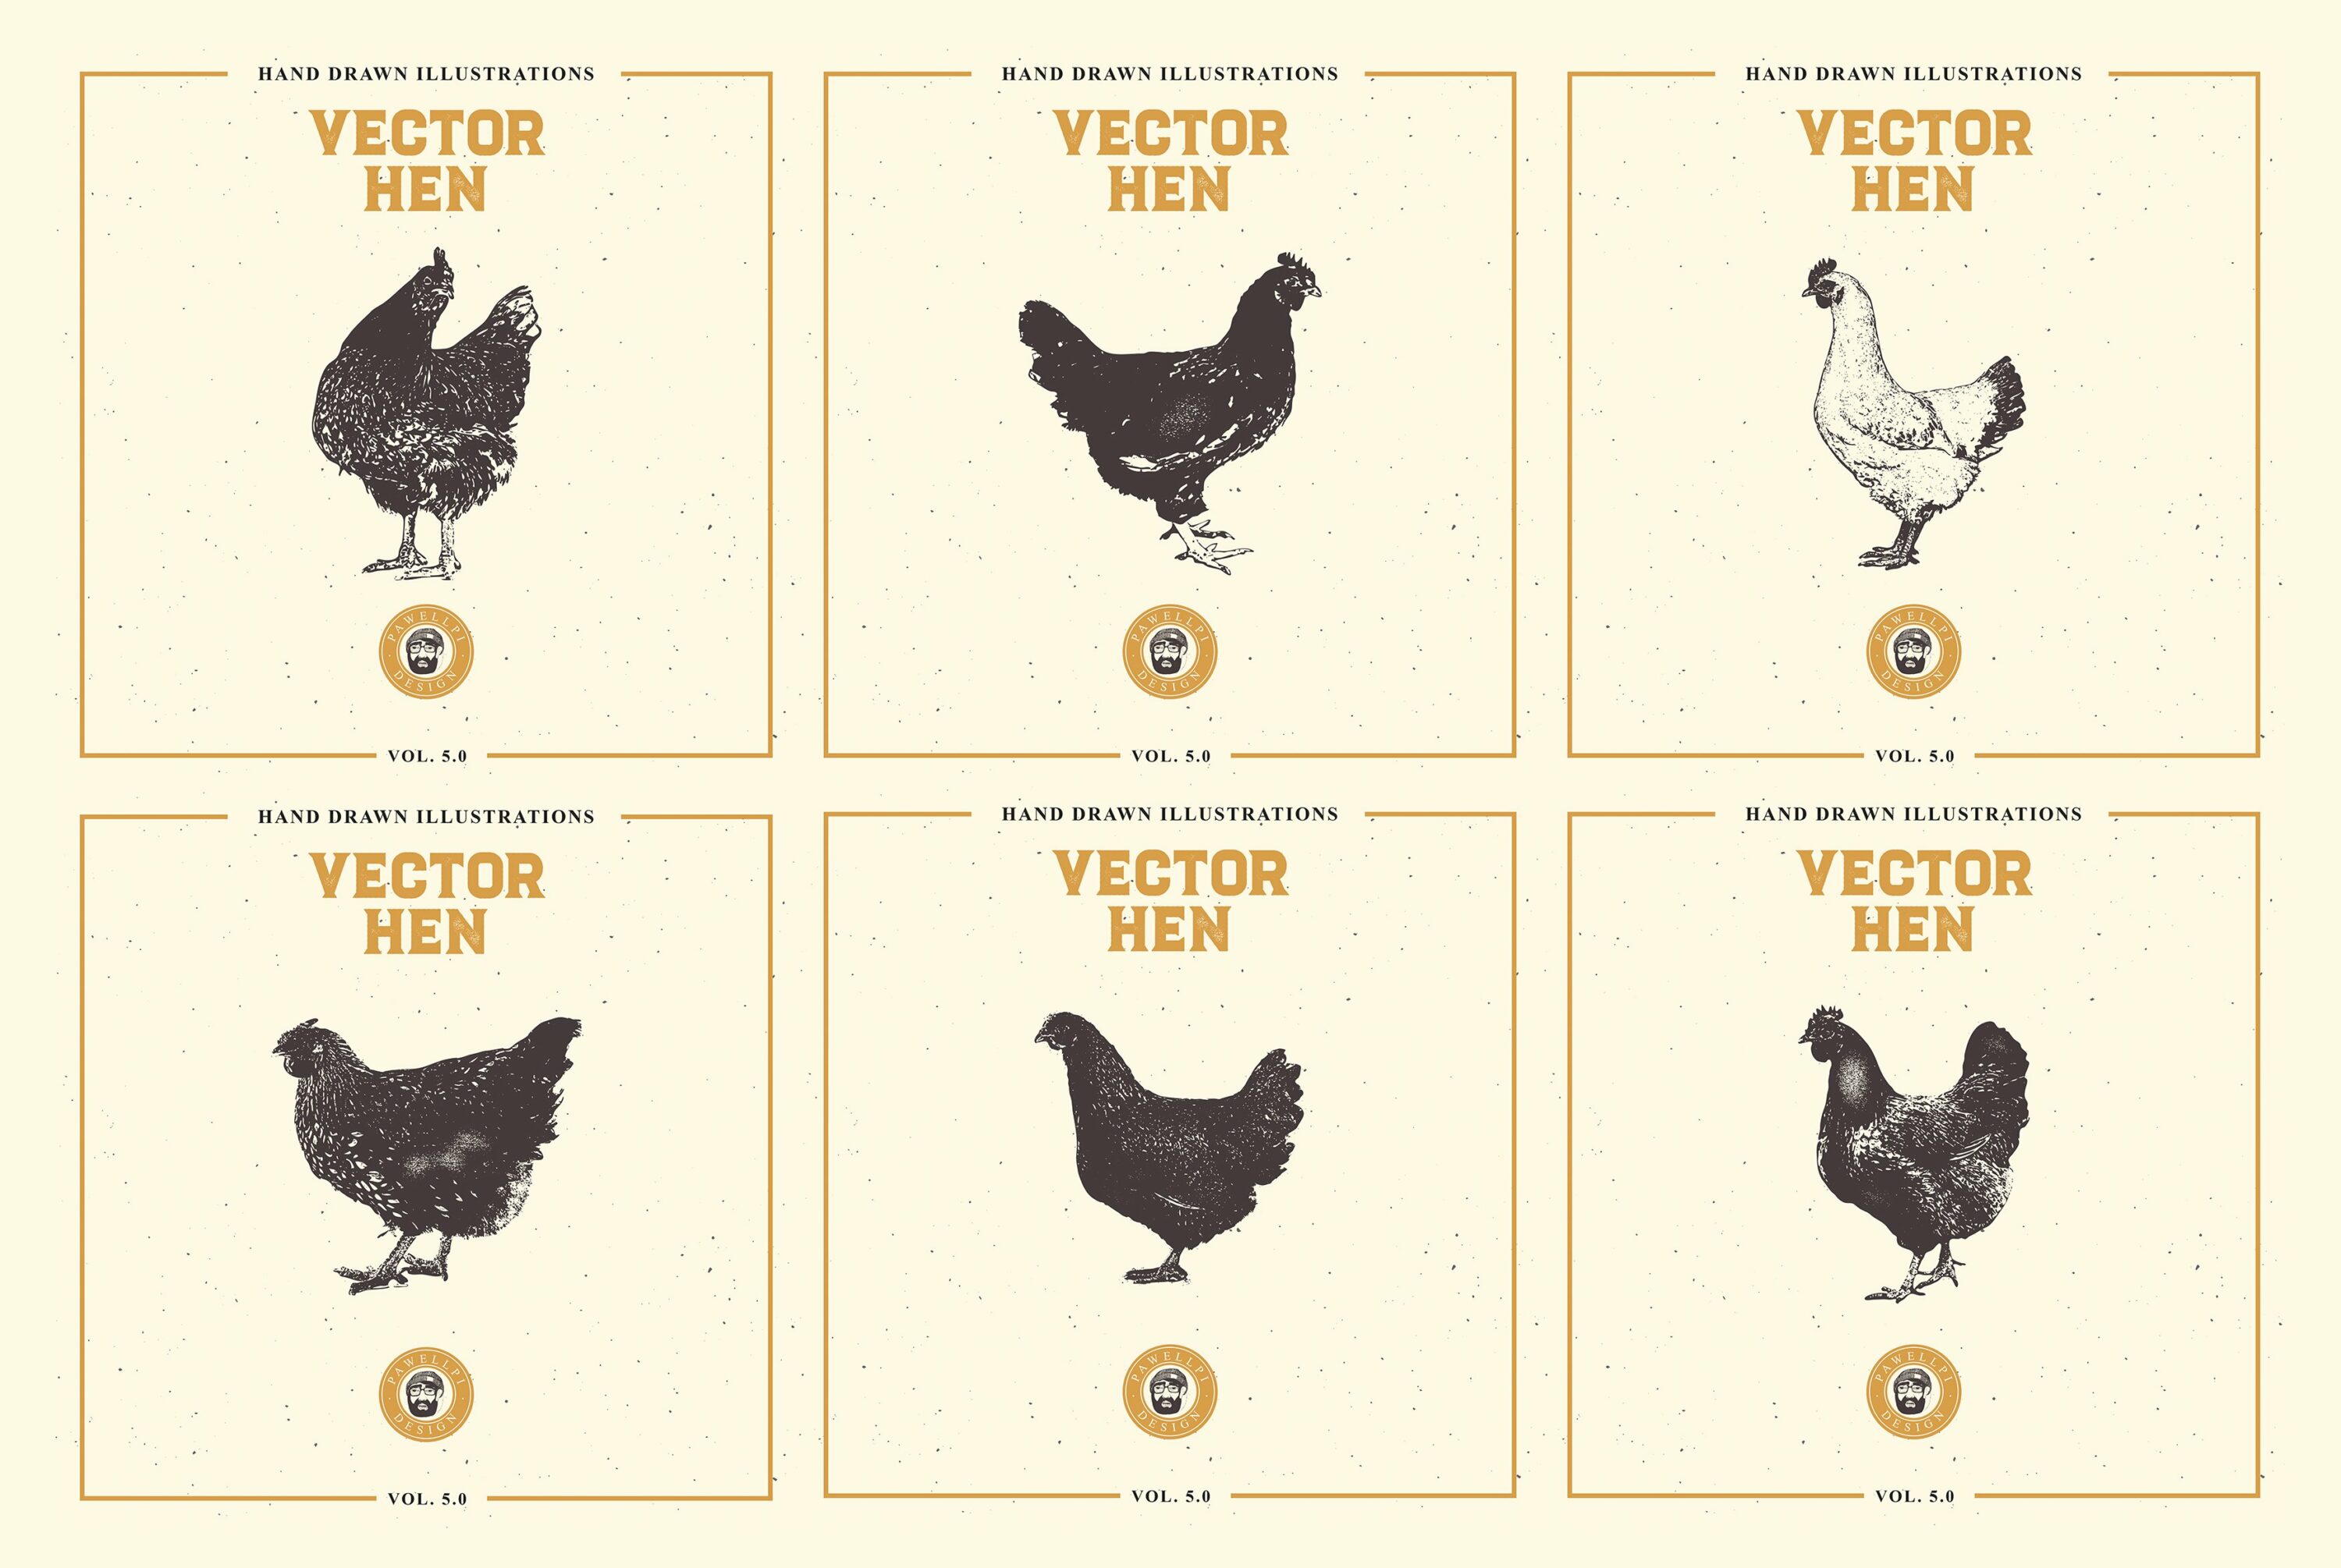 Cool hens for interesting illustration.